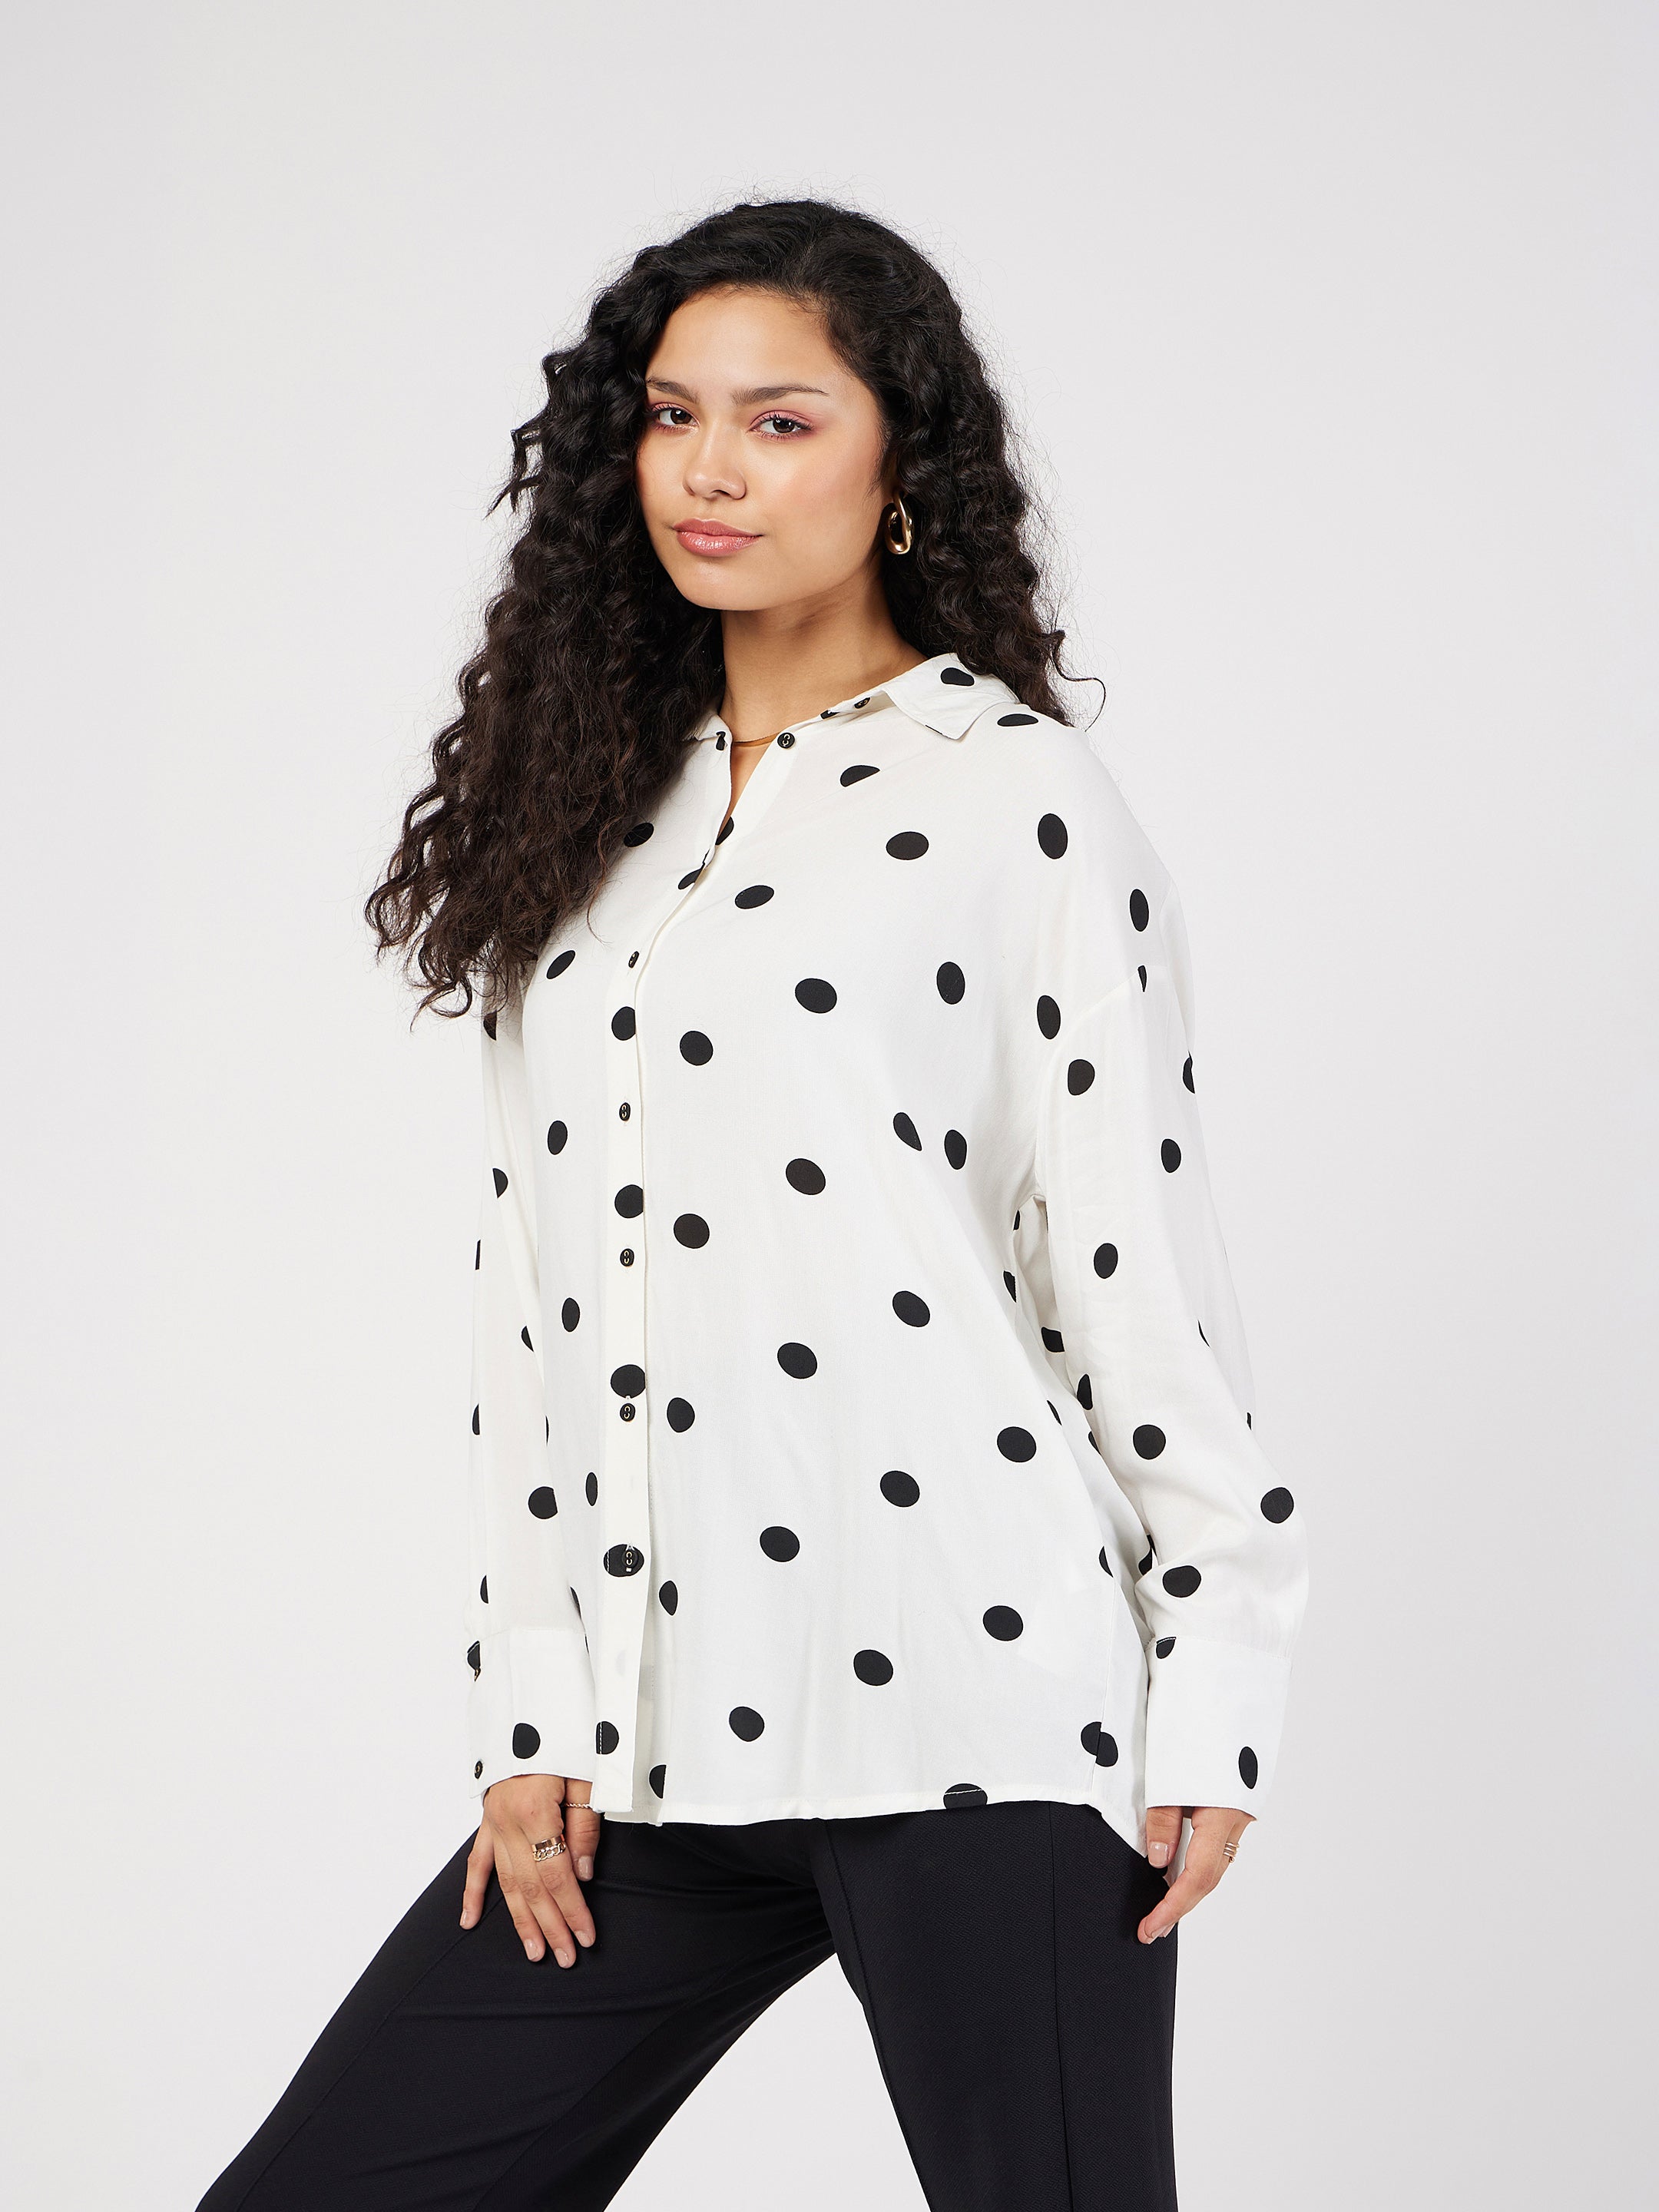 Women's White & Black Polka Dot Oversize Shirt - Lyush